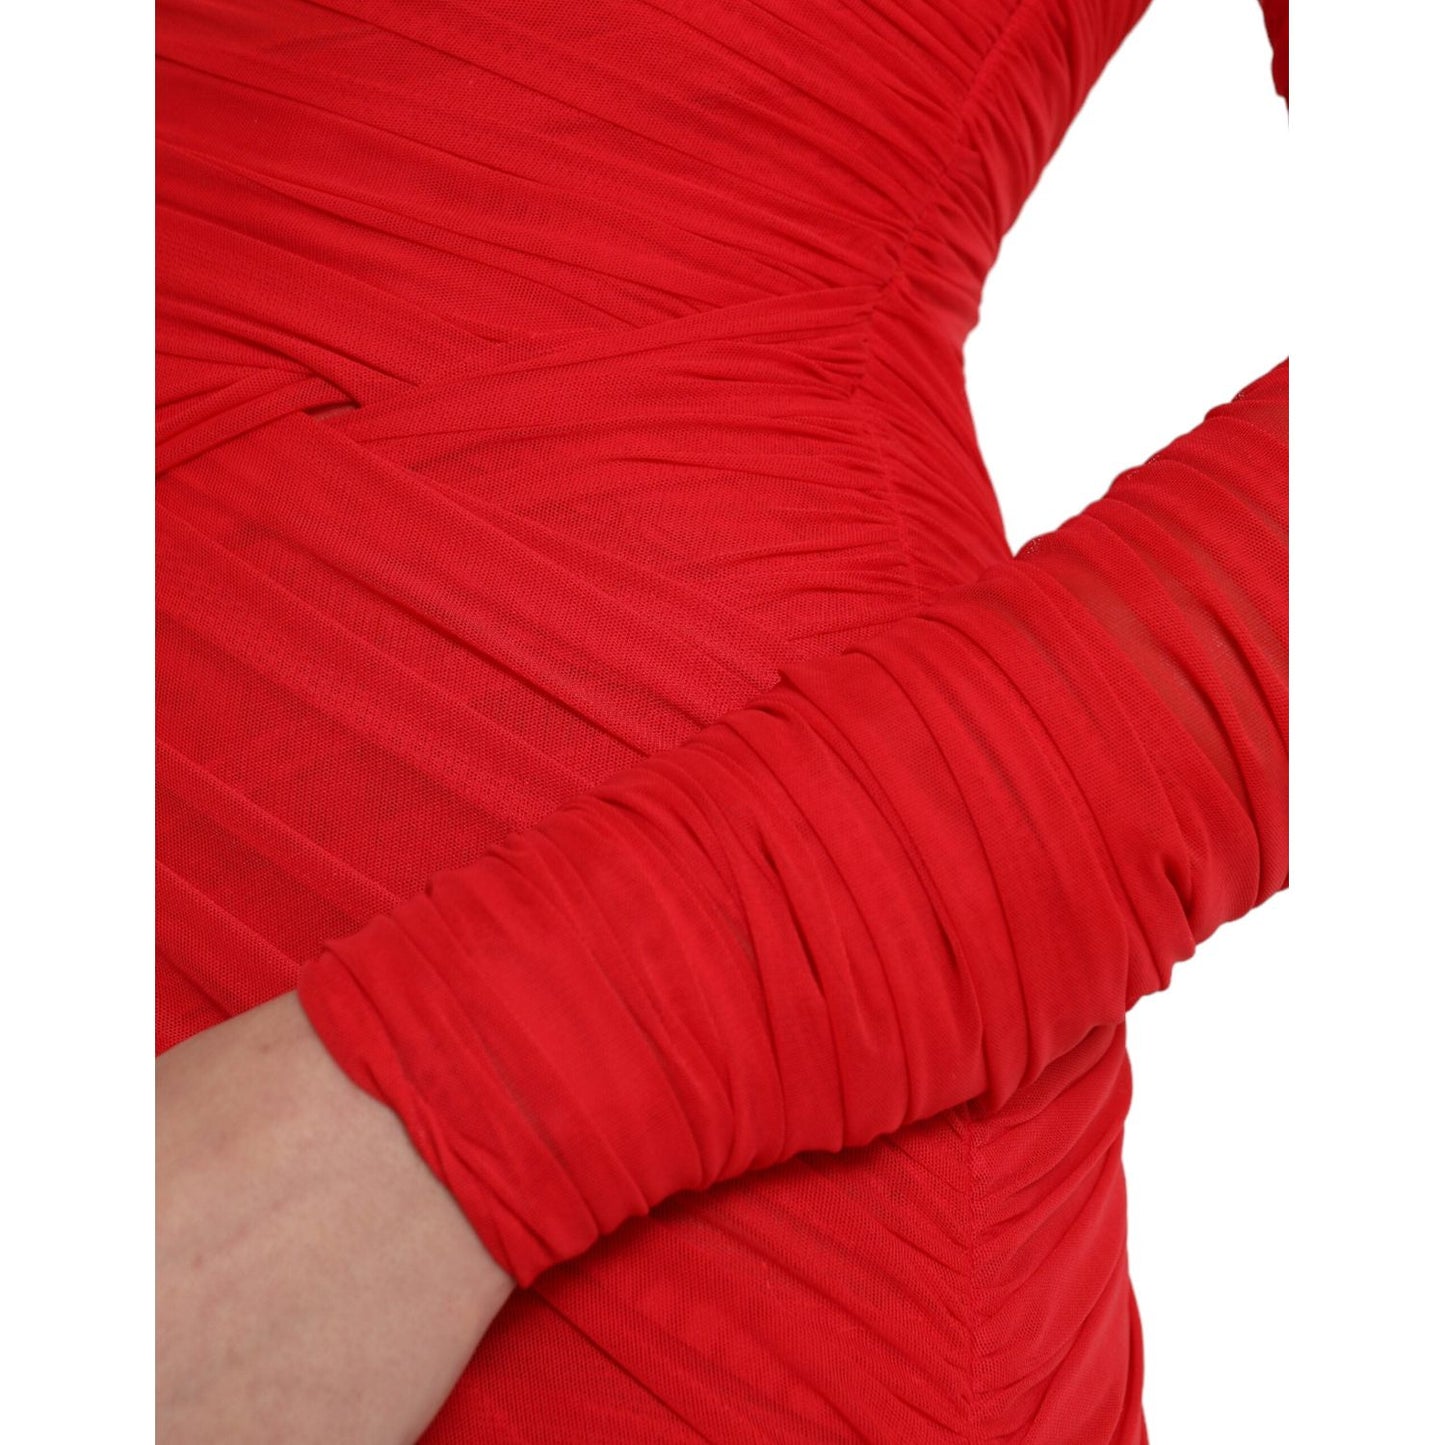 Dolce & Gabbana Radiant Red Stretch Satin Midi Dress red-nylon-stretch-cut-out-midi-dress